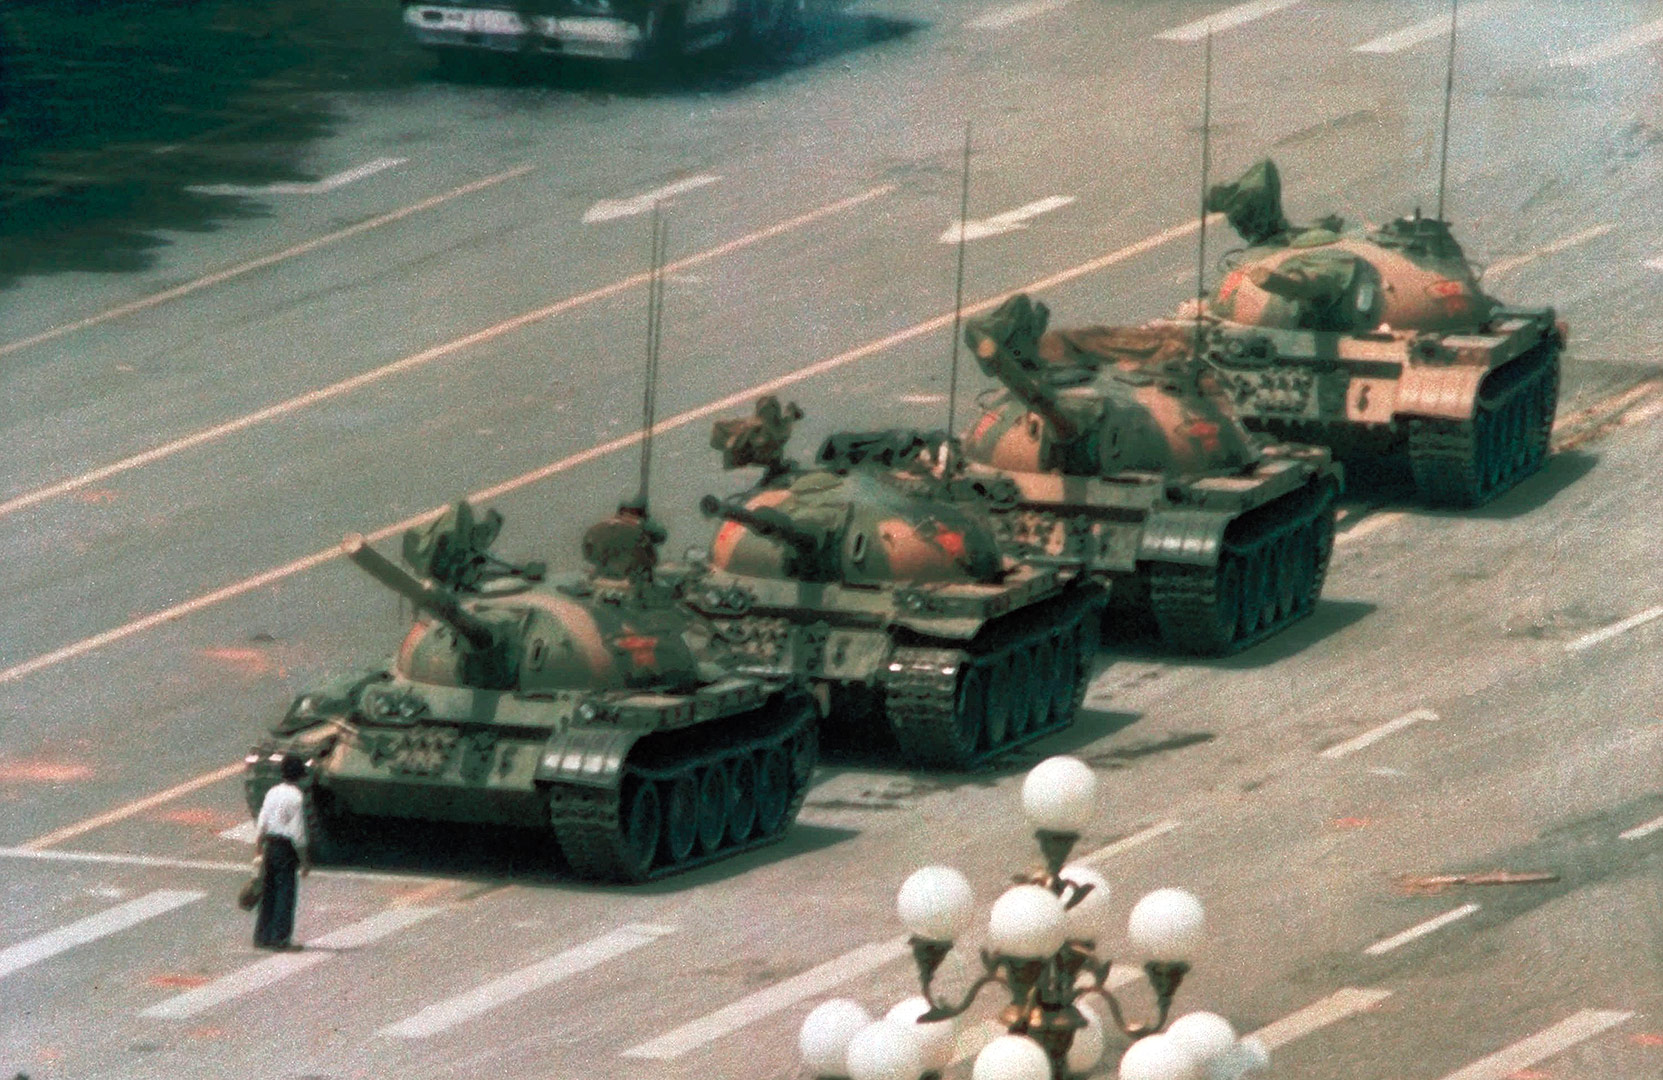 The tank-man Beijing 1989